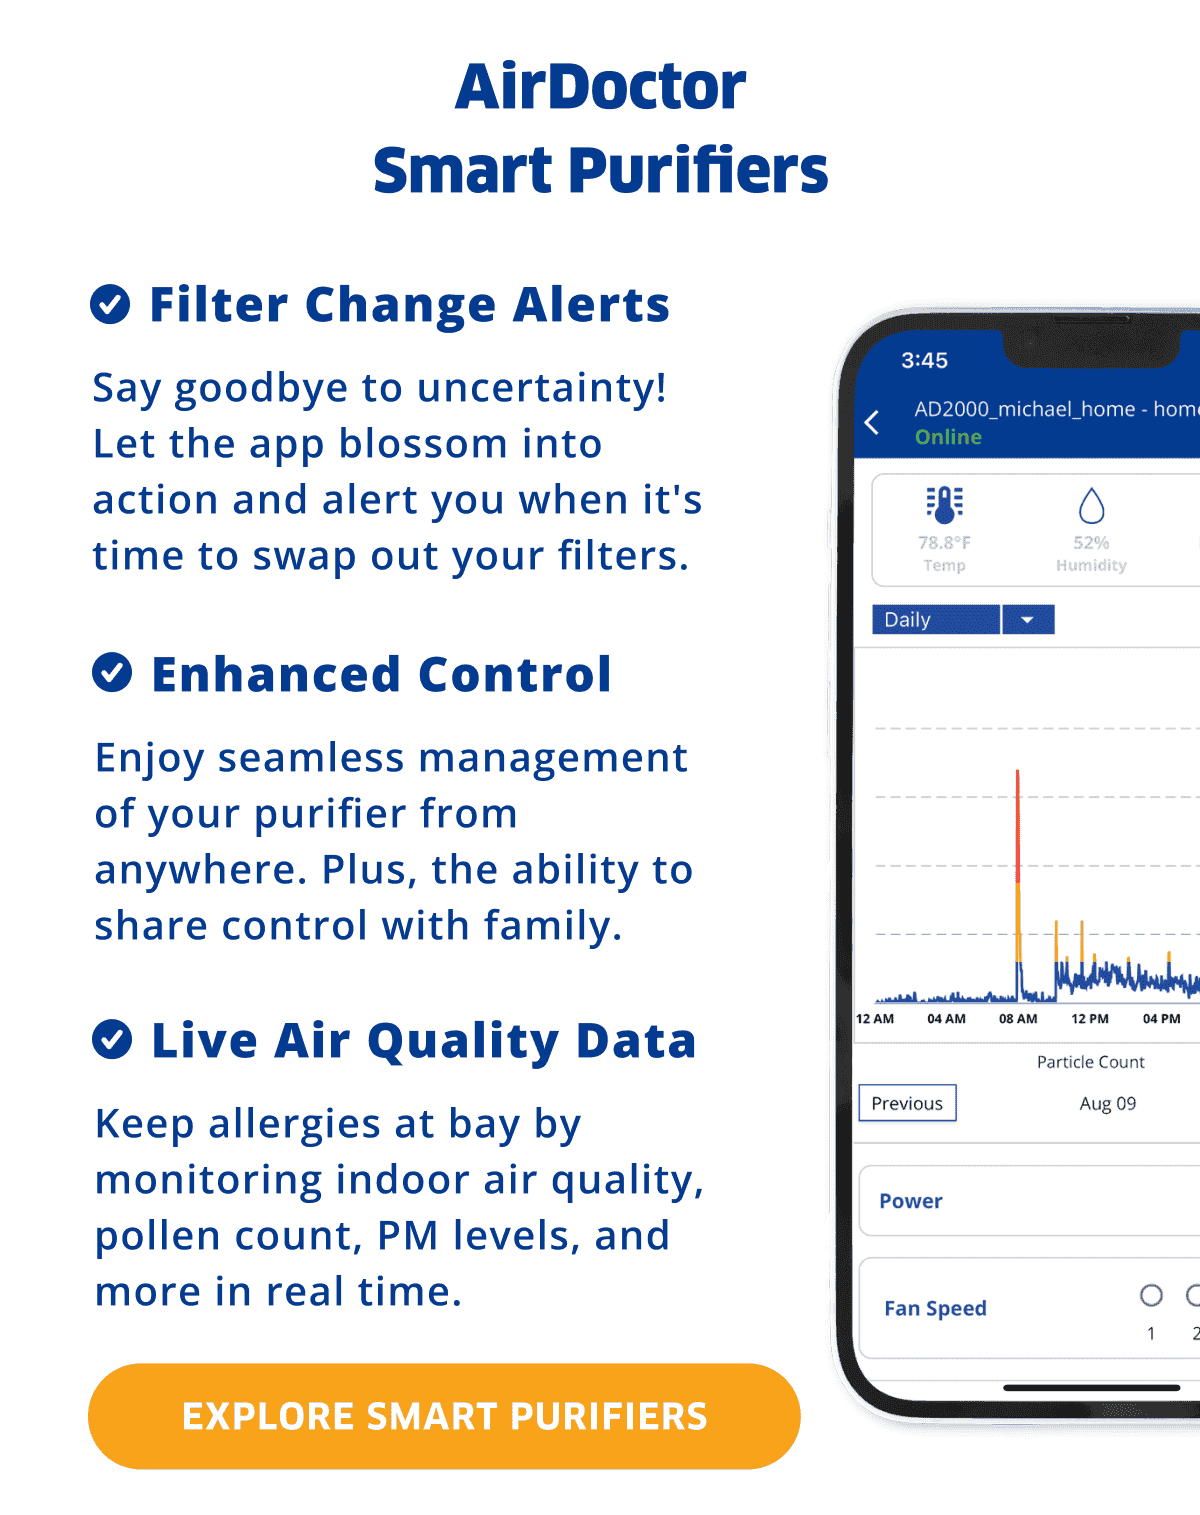 AirDoctor Smart Purifiers | Explore Smart Purifiers